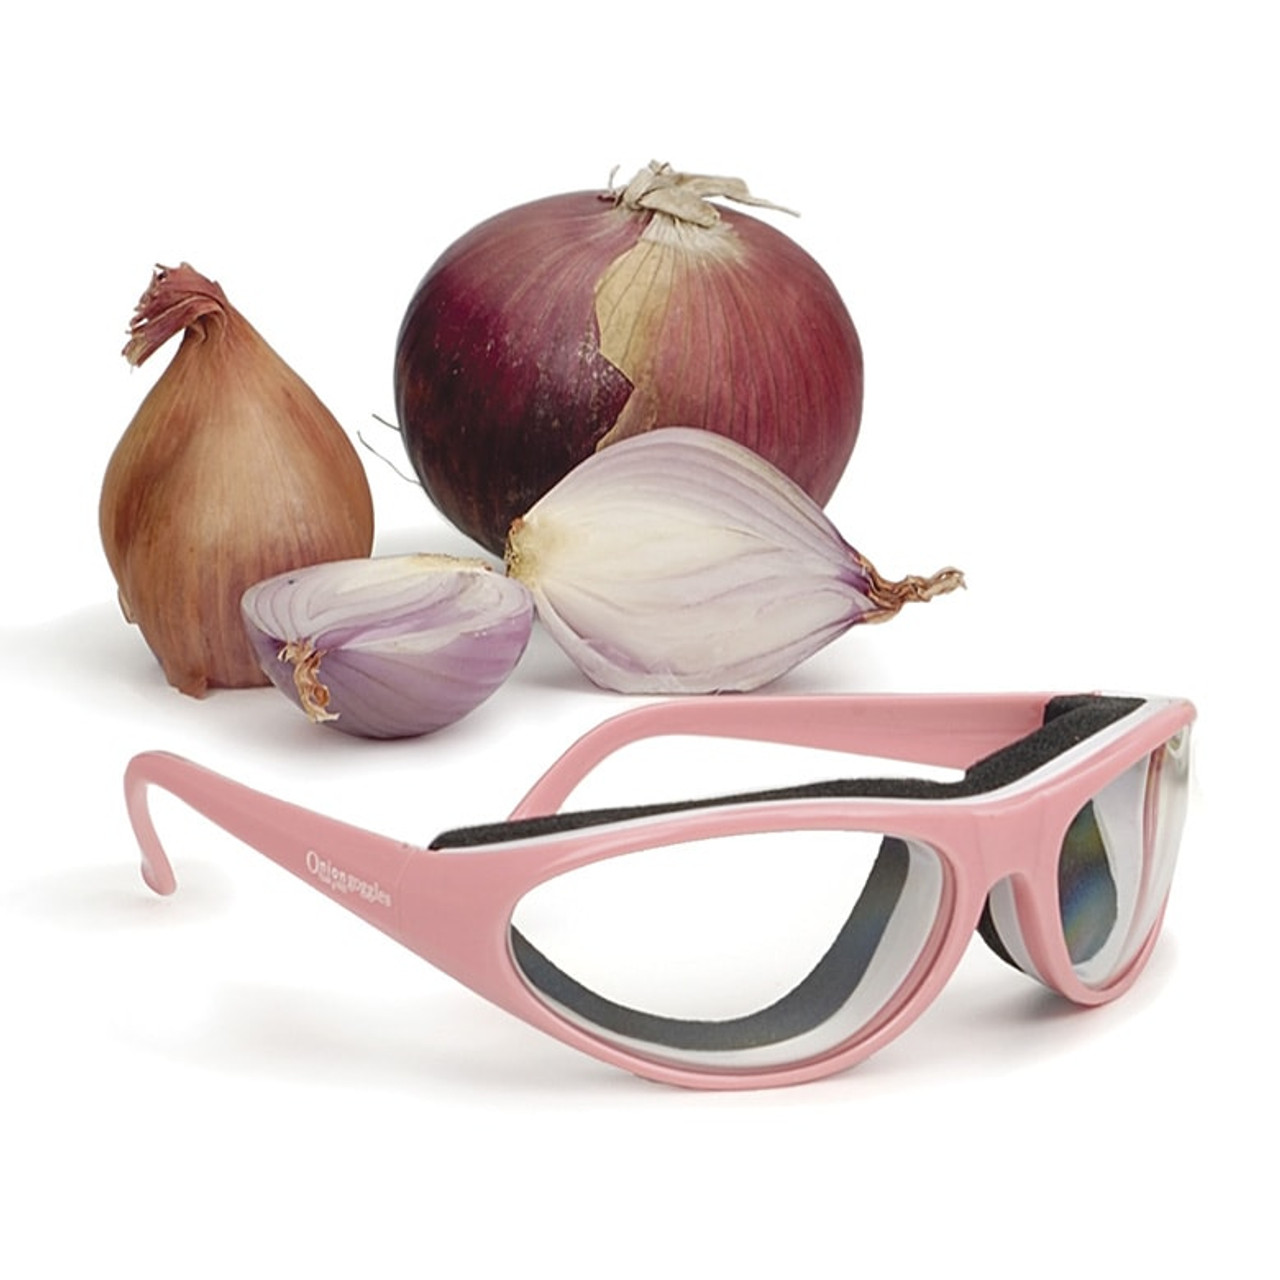 Rsvp Black Onion Goggles